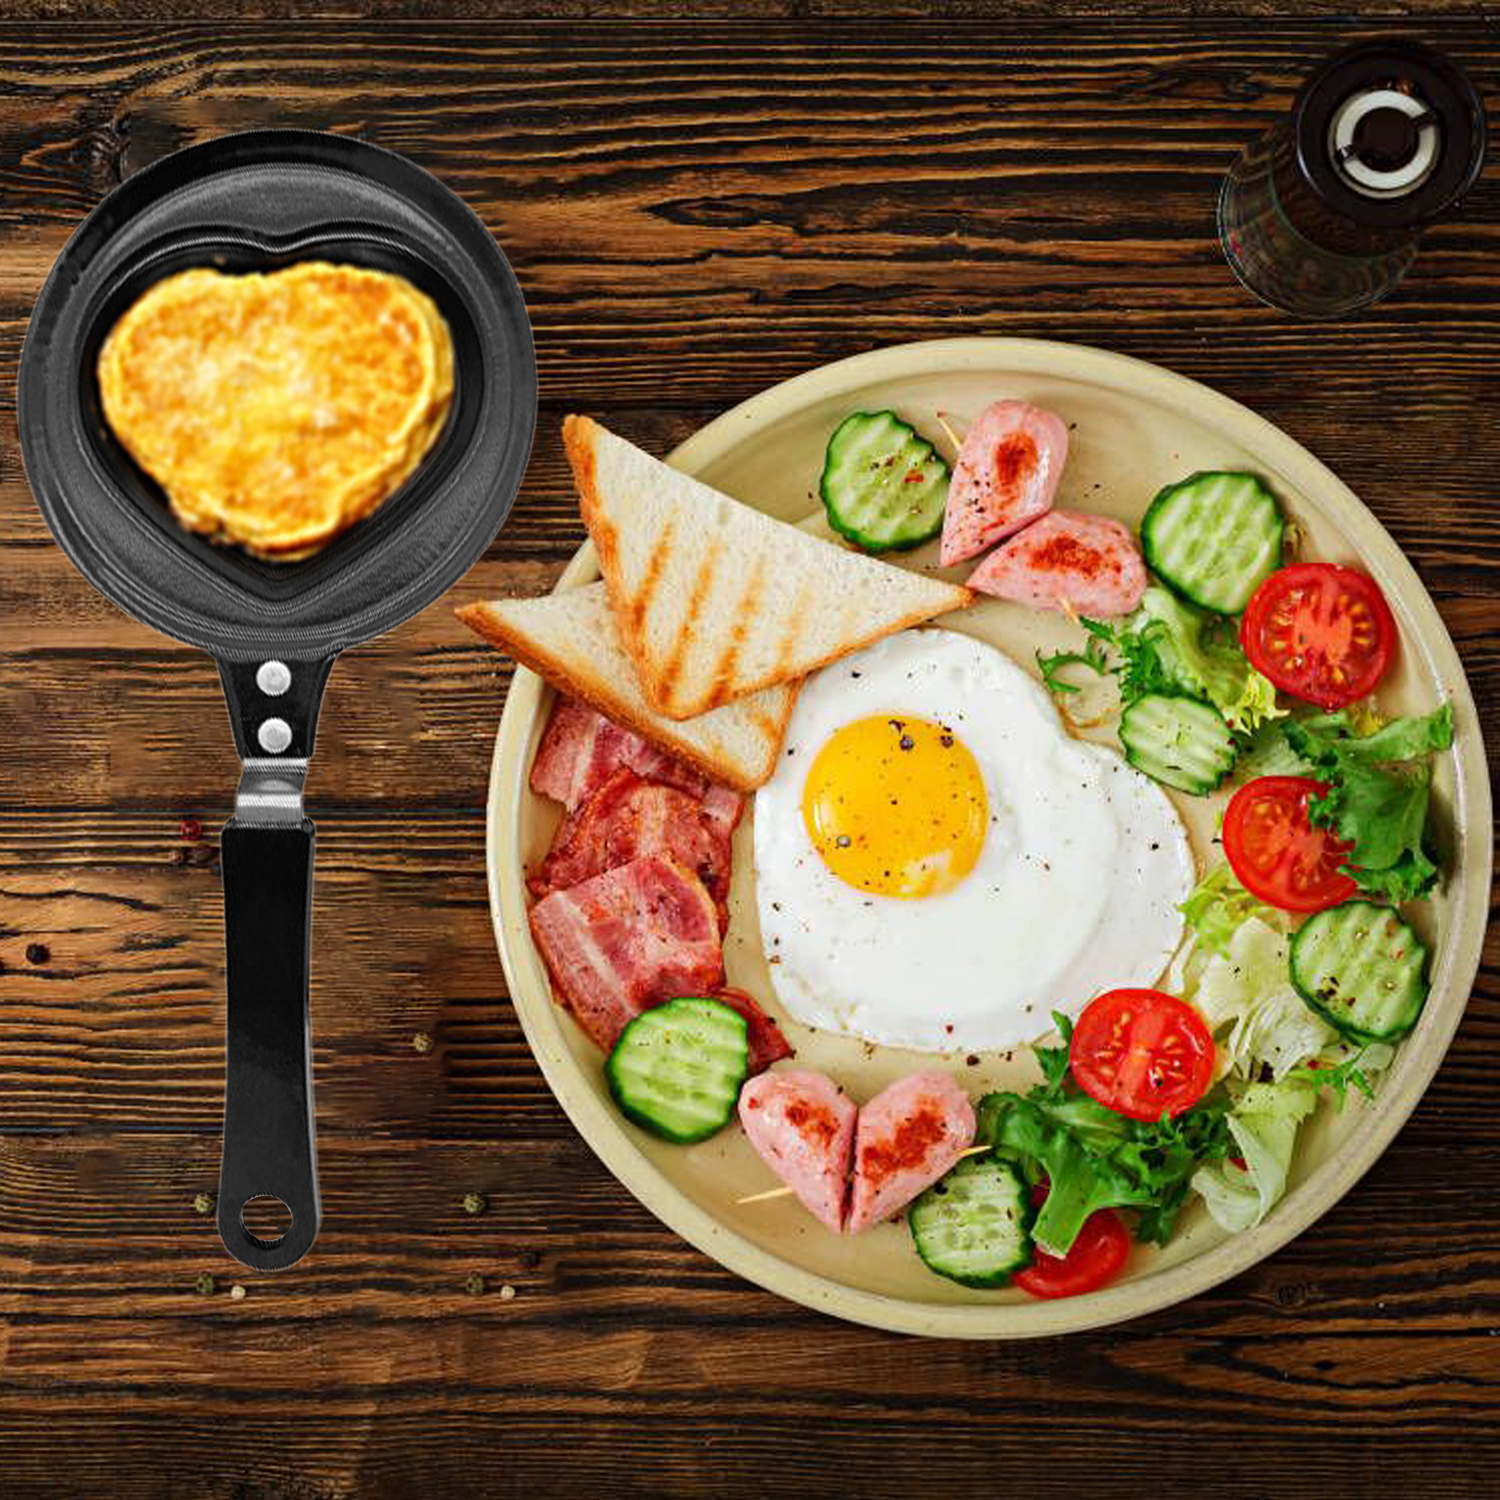 1Pc Mini Cute Breakfast Egg Frying Pot Non-Stick Frying Pan Pancake Maker Kitchen Tools Egg Mold Pan Flip Omelette Mold